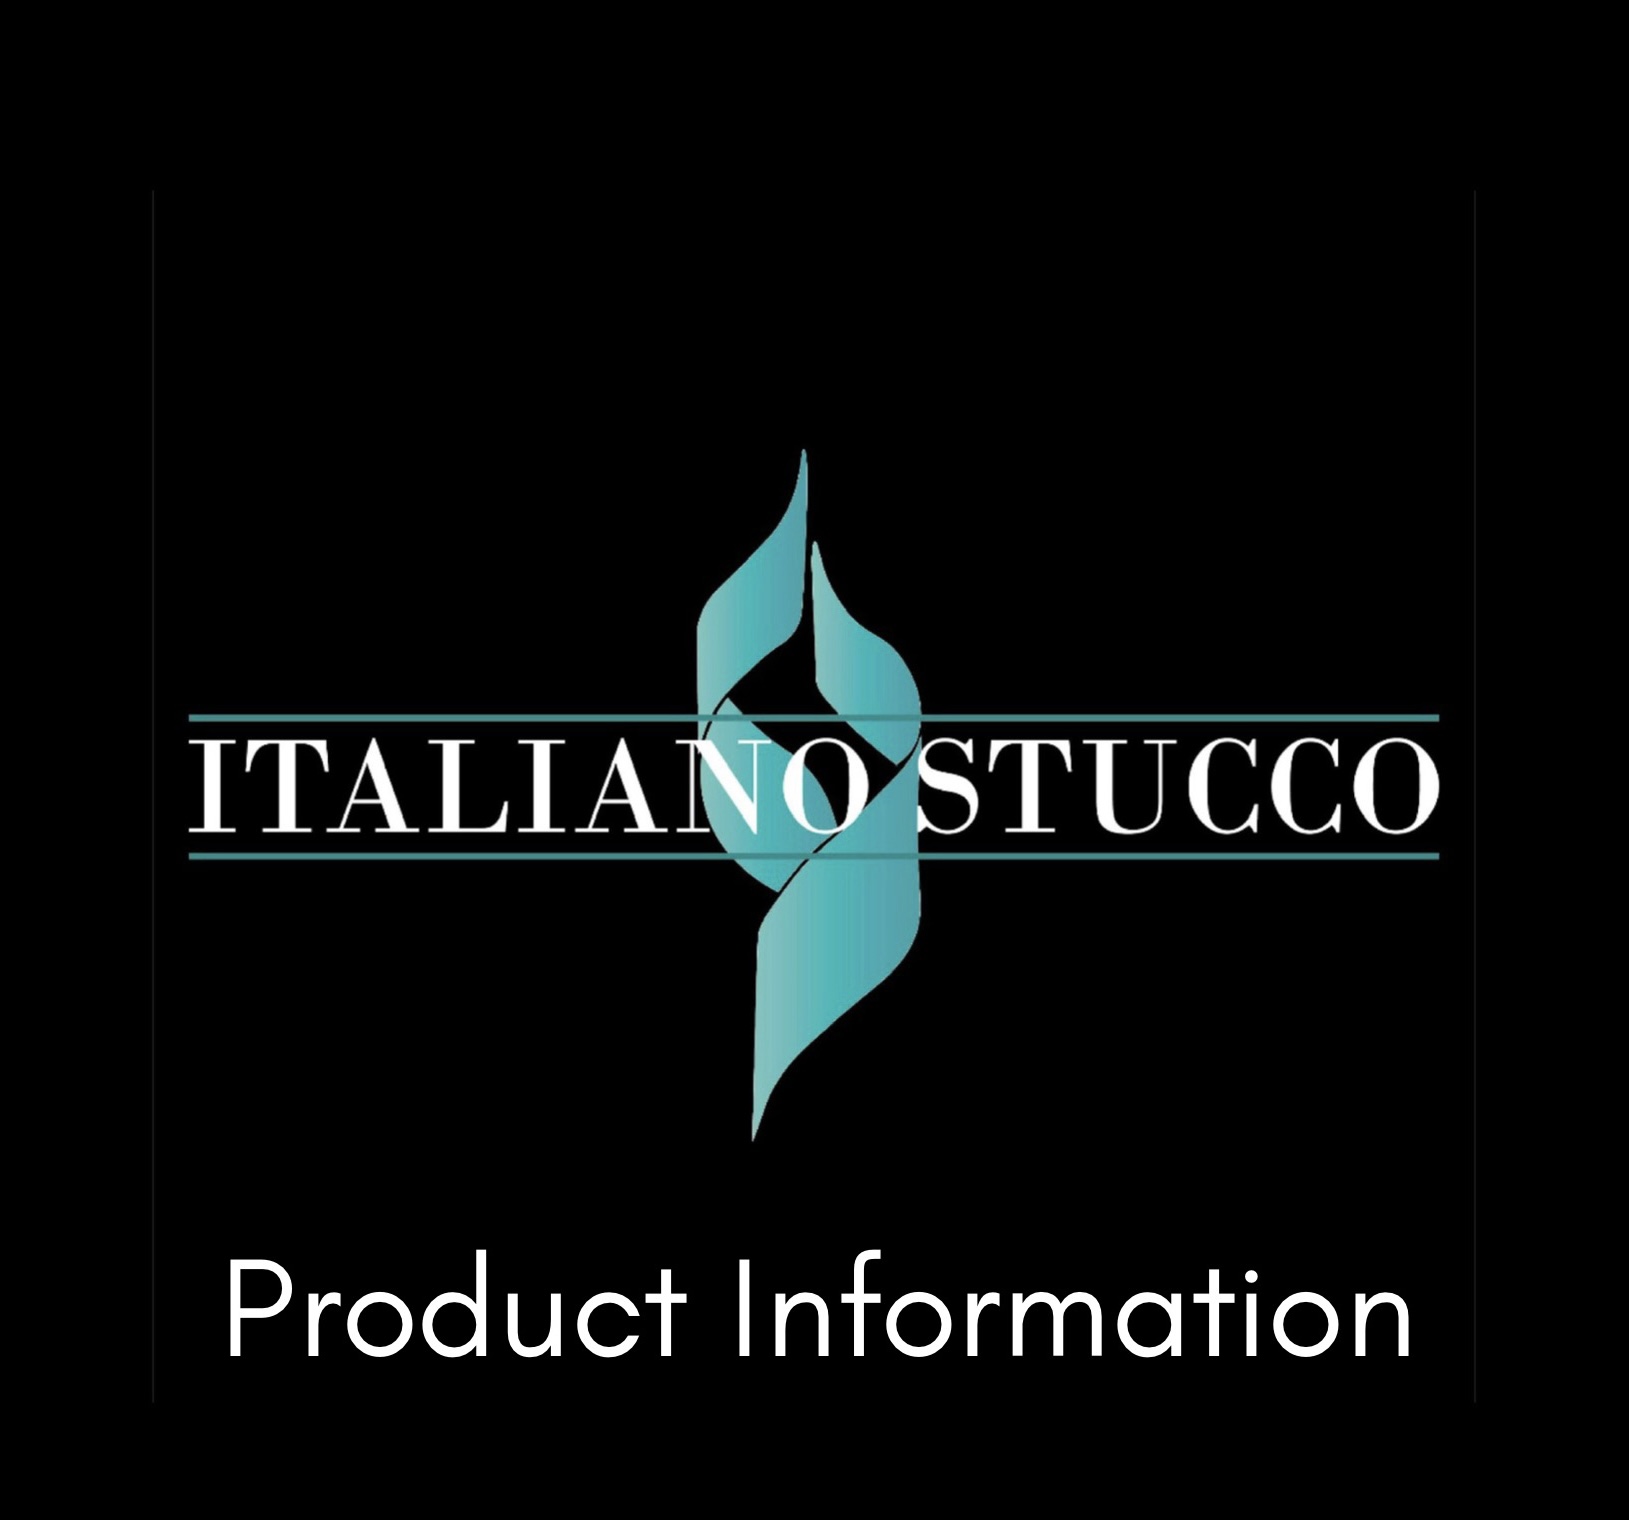 Italiano Stucco product information